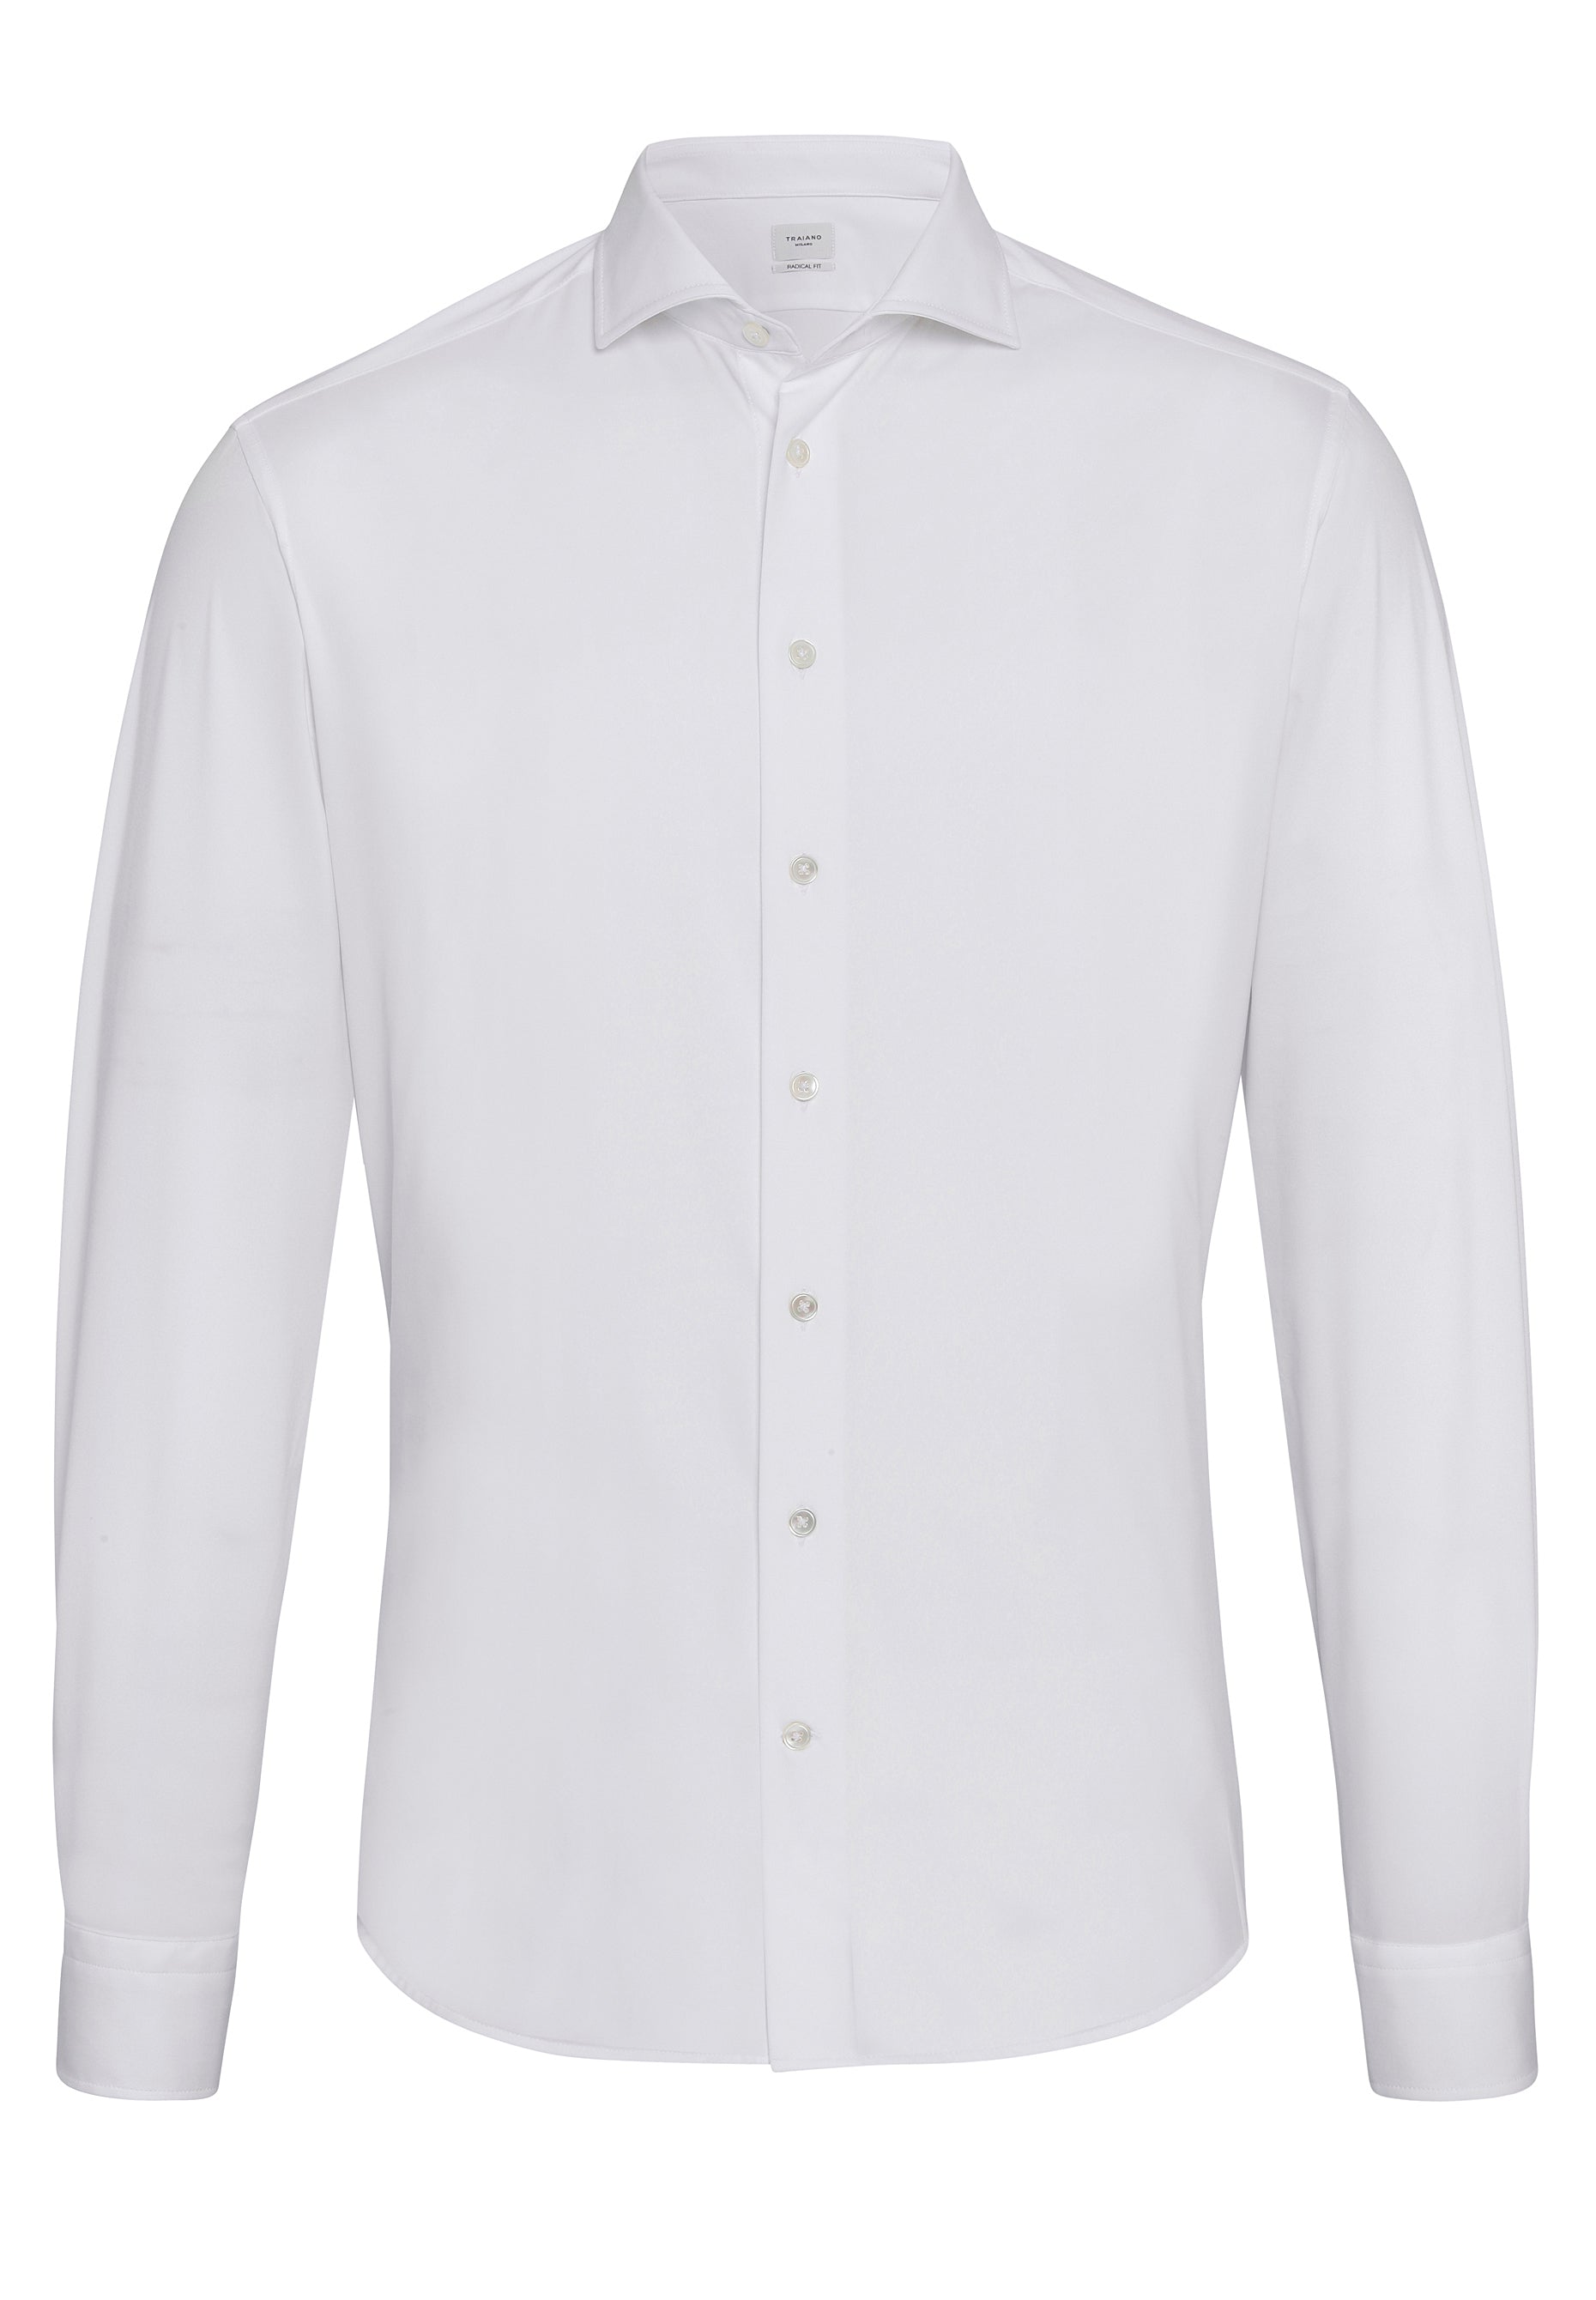 T1000-311 Traiano Rossini Radical Fit Shirt 900 white uni